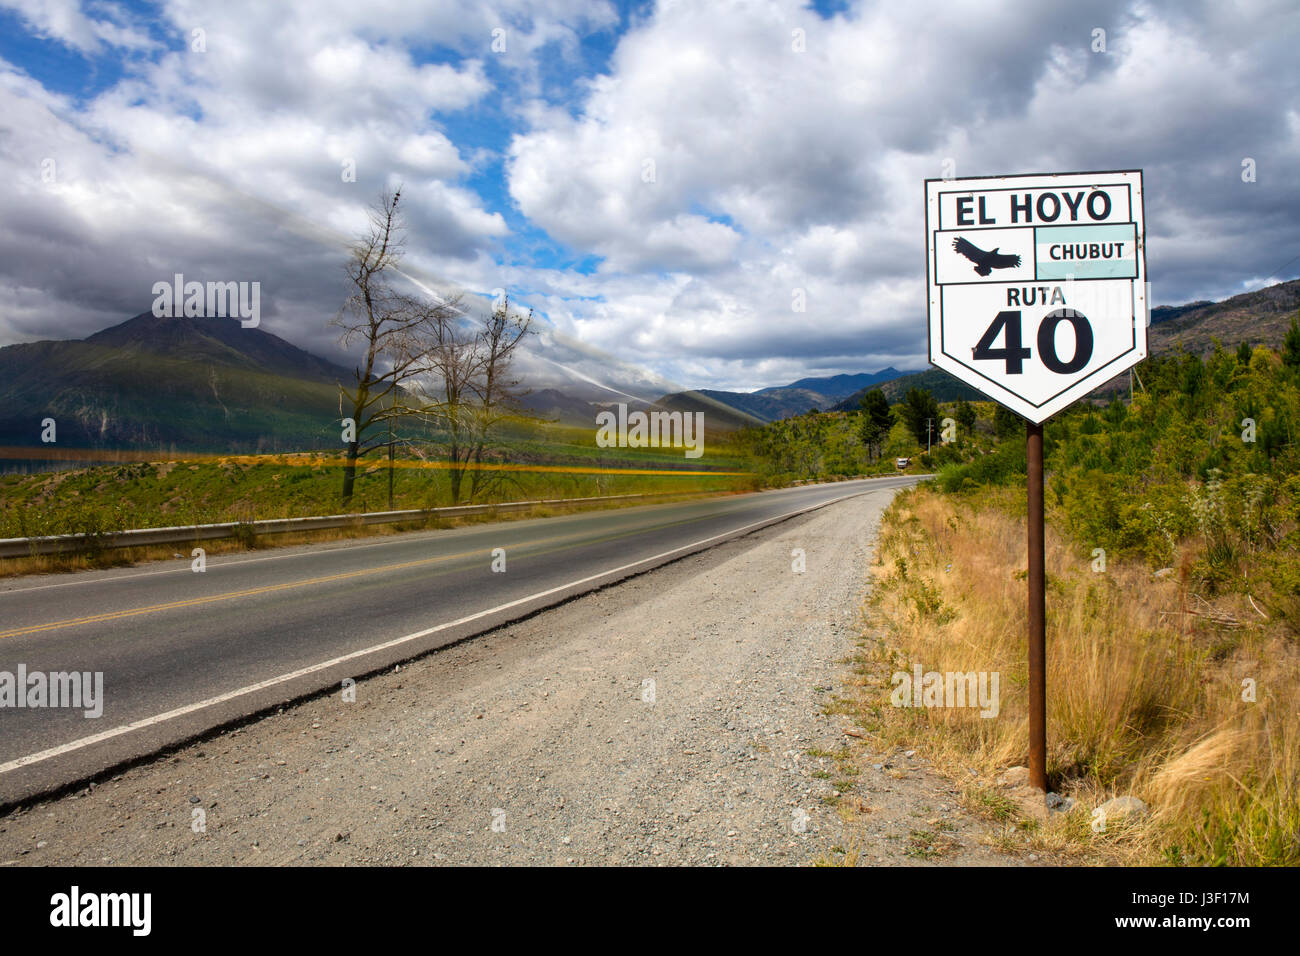 The National Route 40. El Hoyo, Chubut, Argentina. Stock Photo